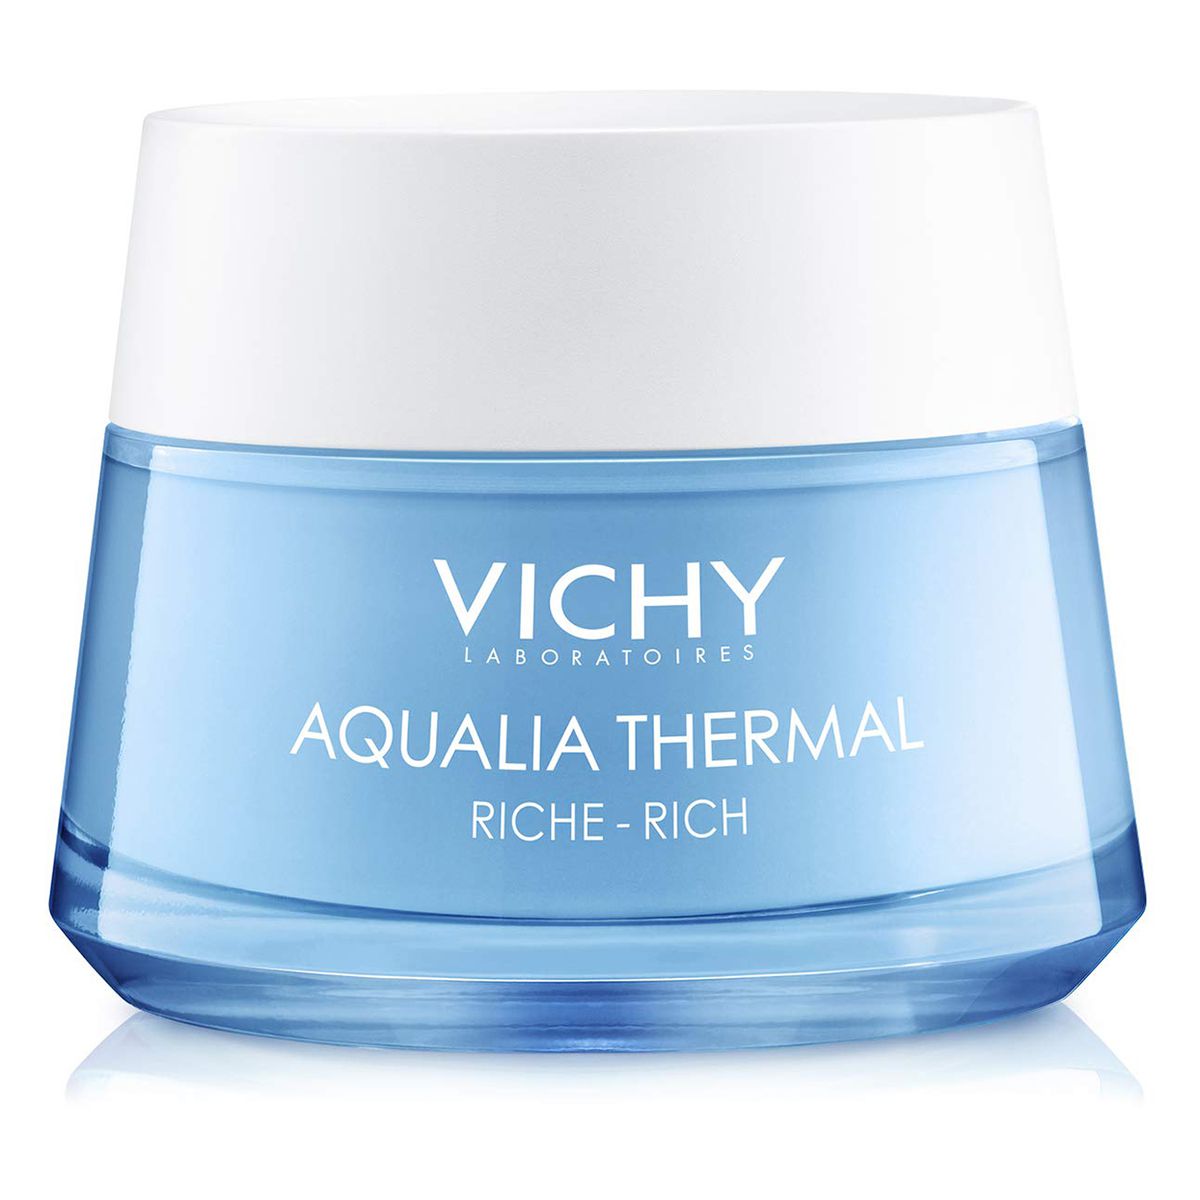 Vichy Aqualia Thermal Moisturizer